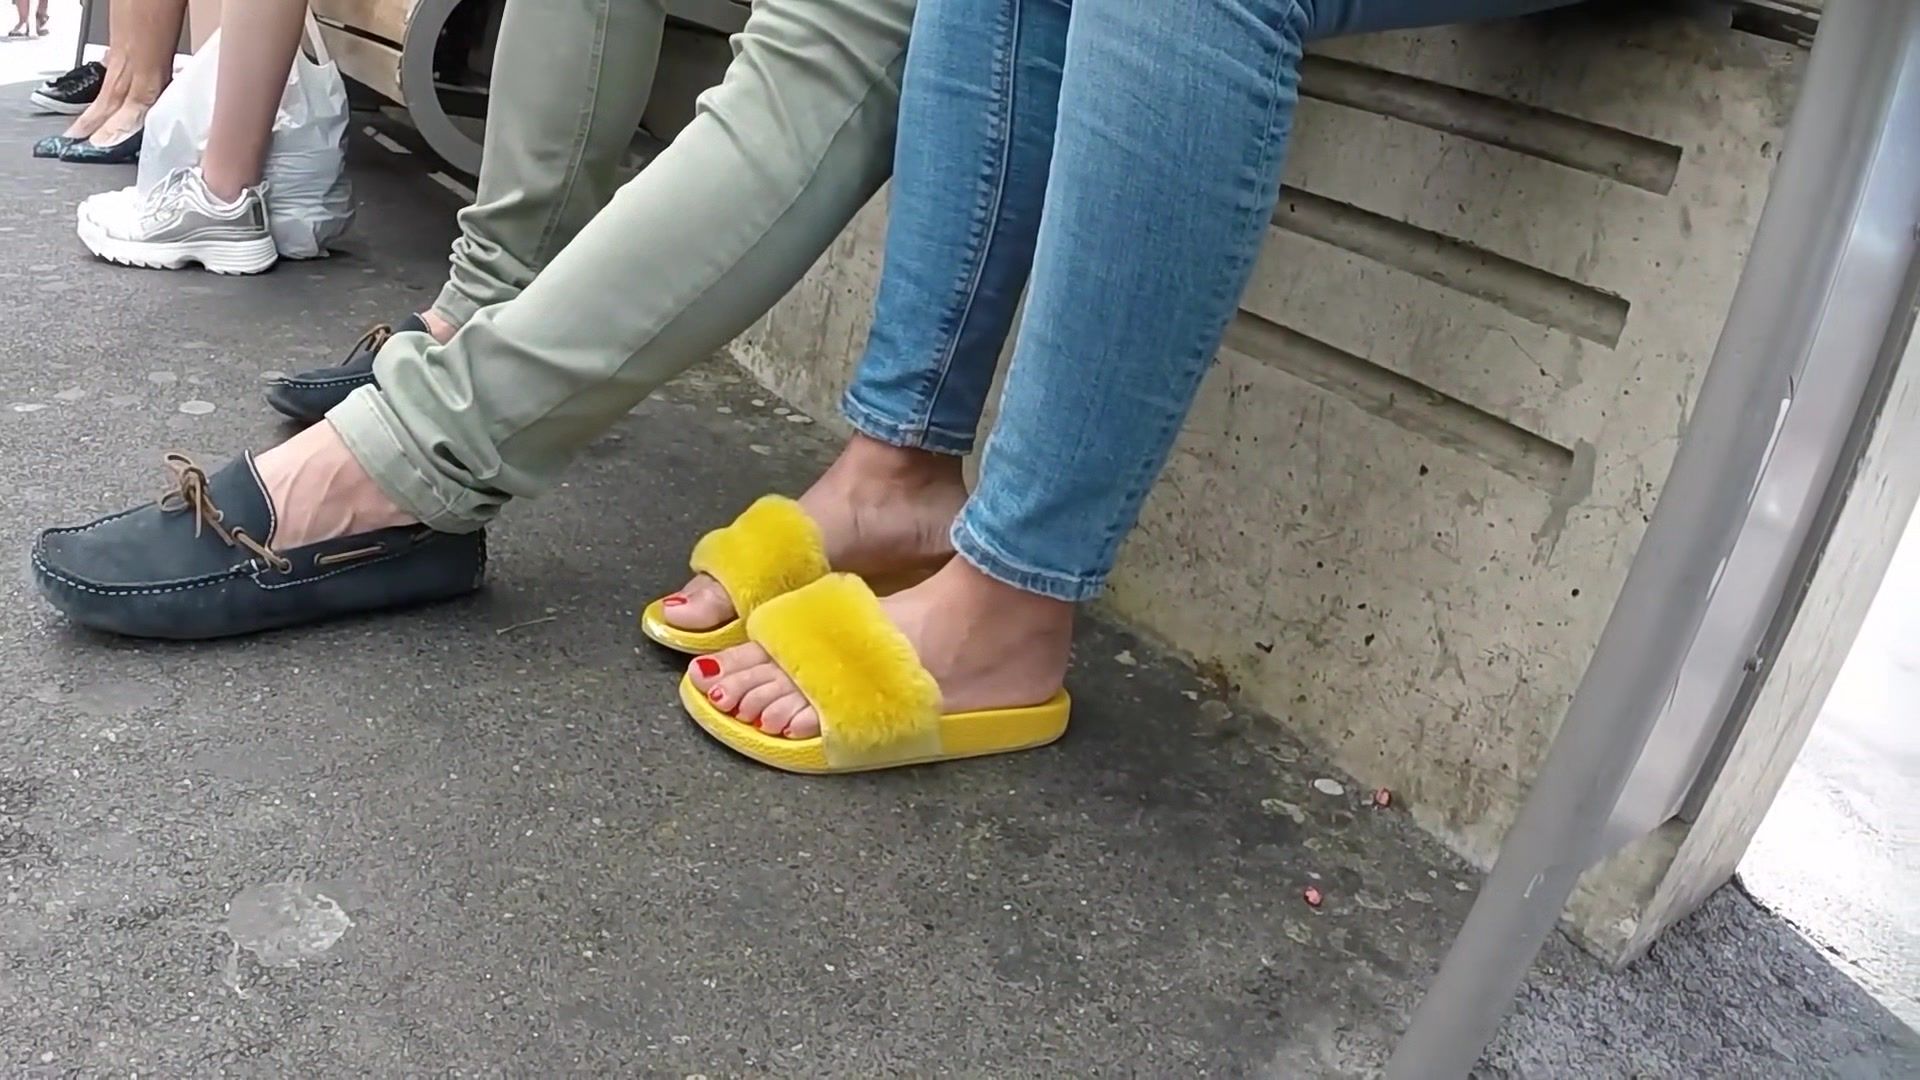 Chica Sexy Feet In The Street Hot Women Fucking - 1